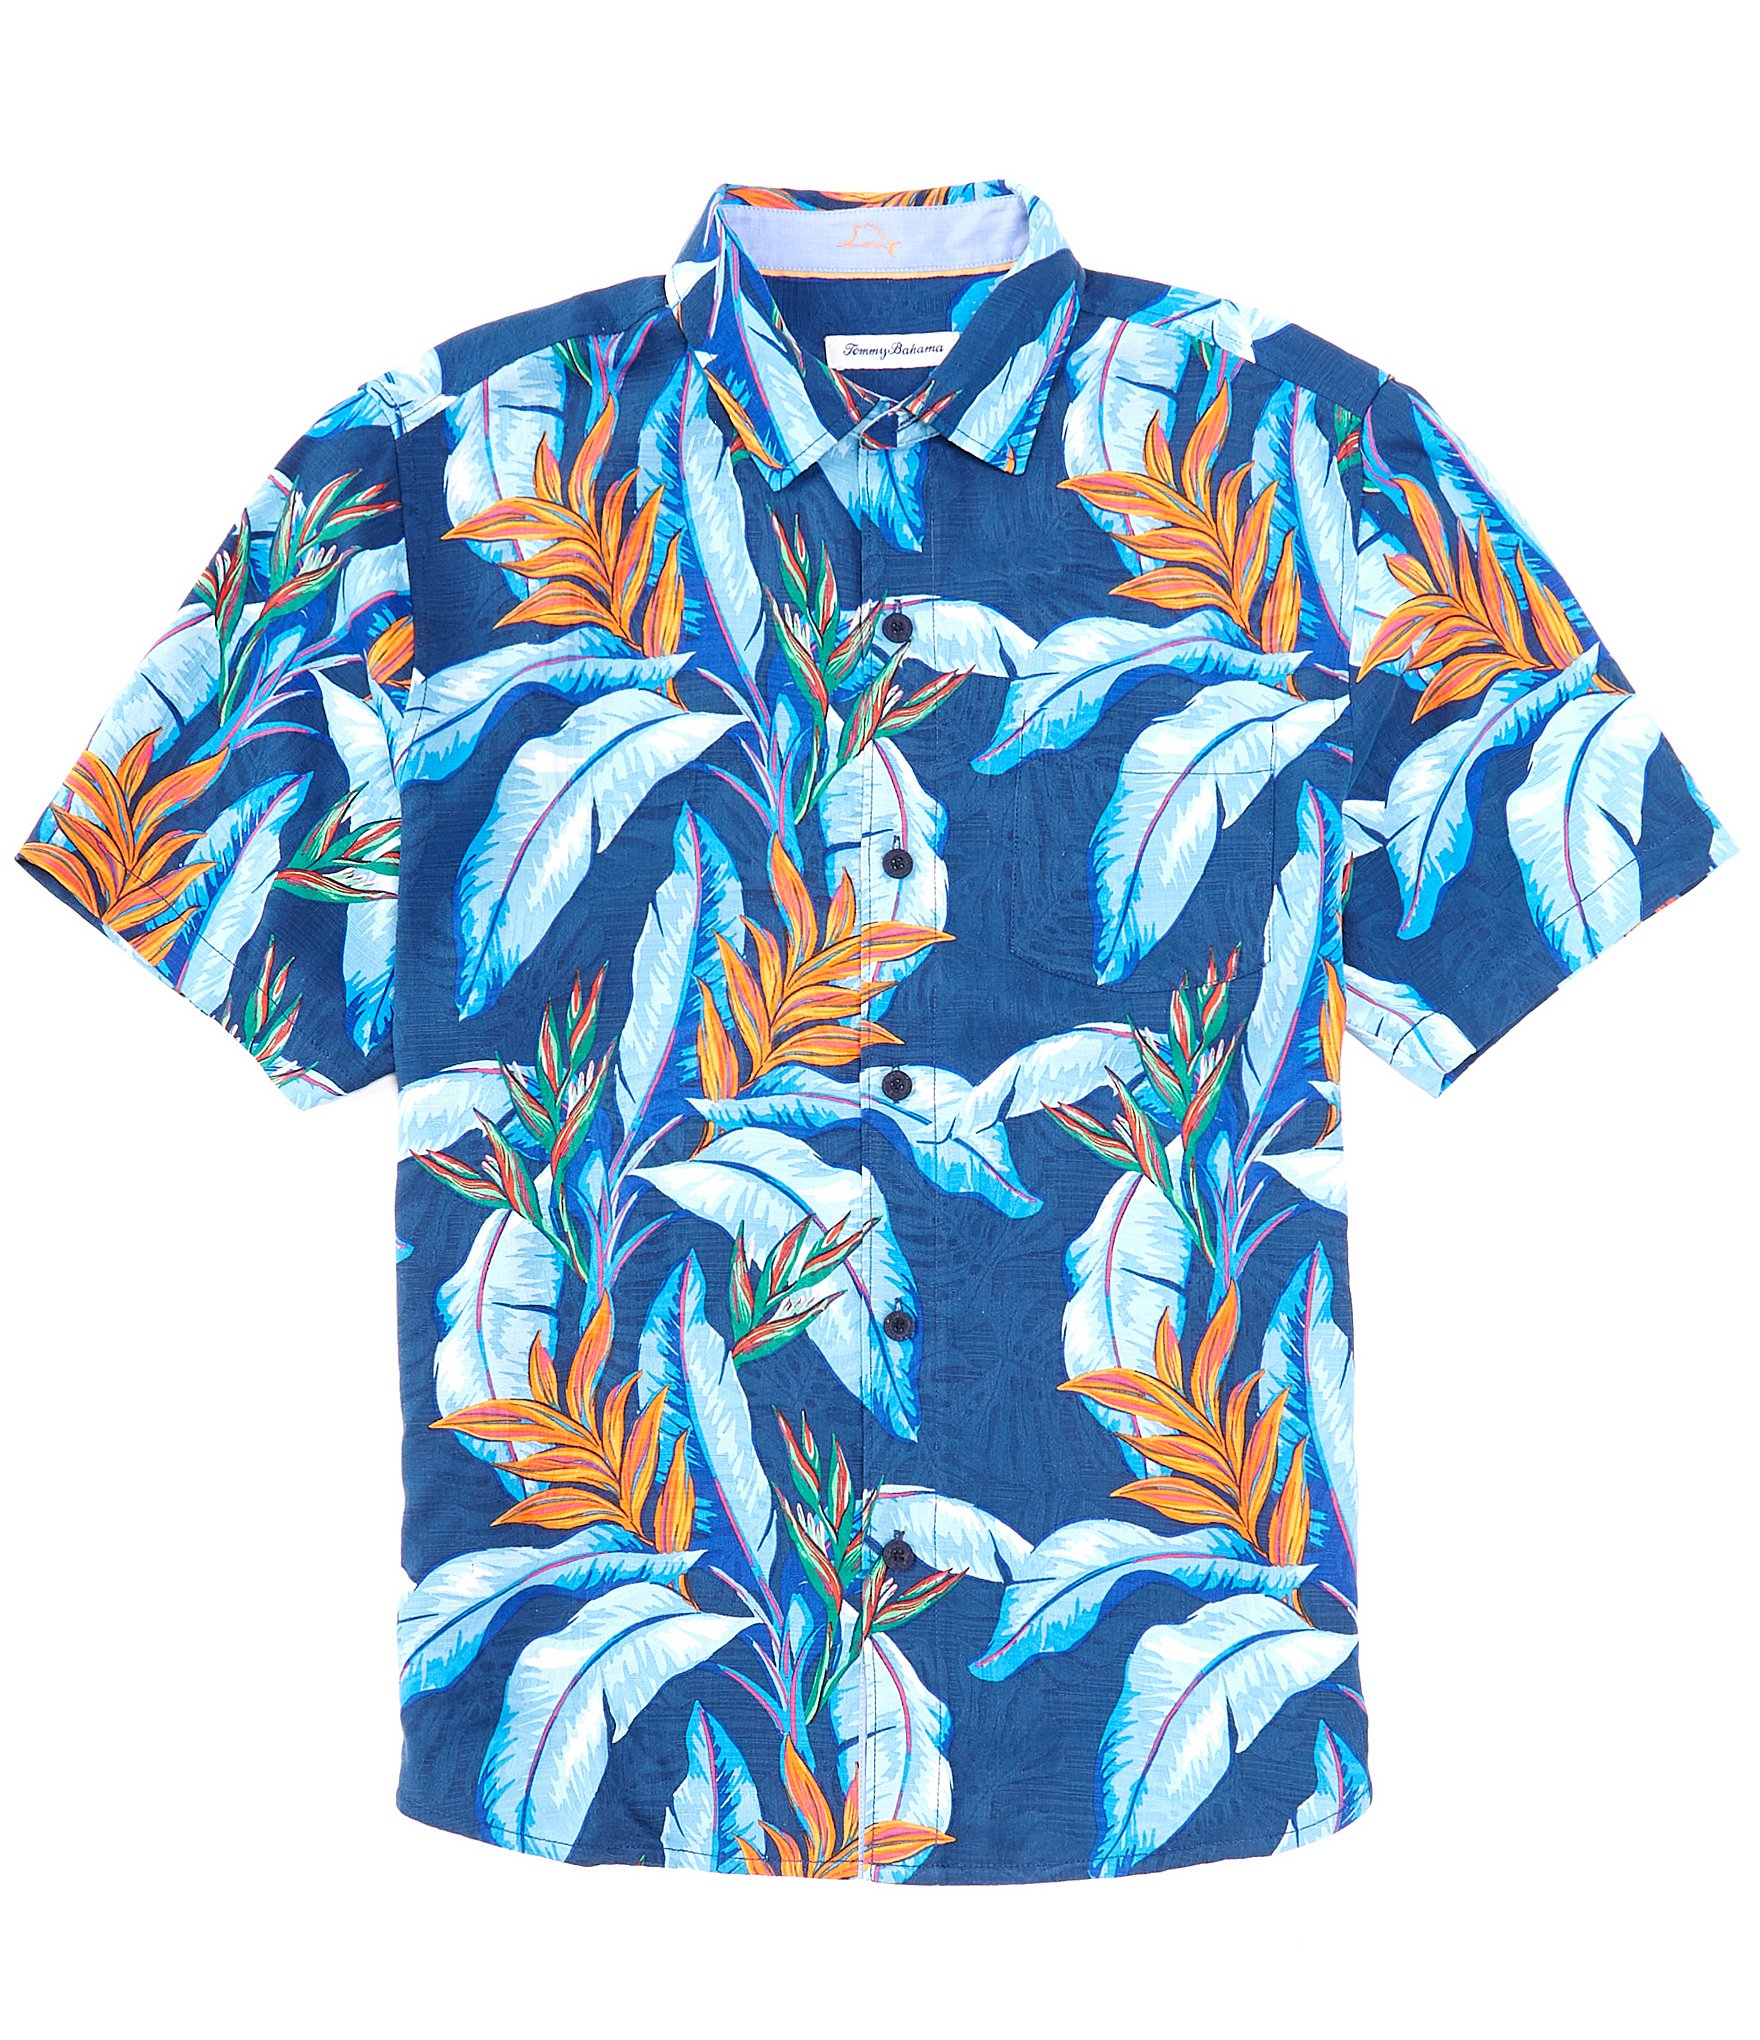 Tommy Bahama Men's Hot Tropics Silk Camp Shirt - Bering Blue - Size M